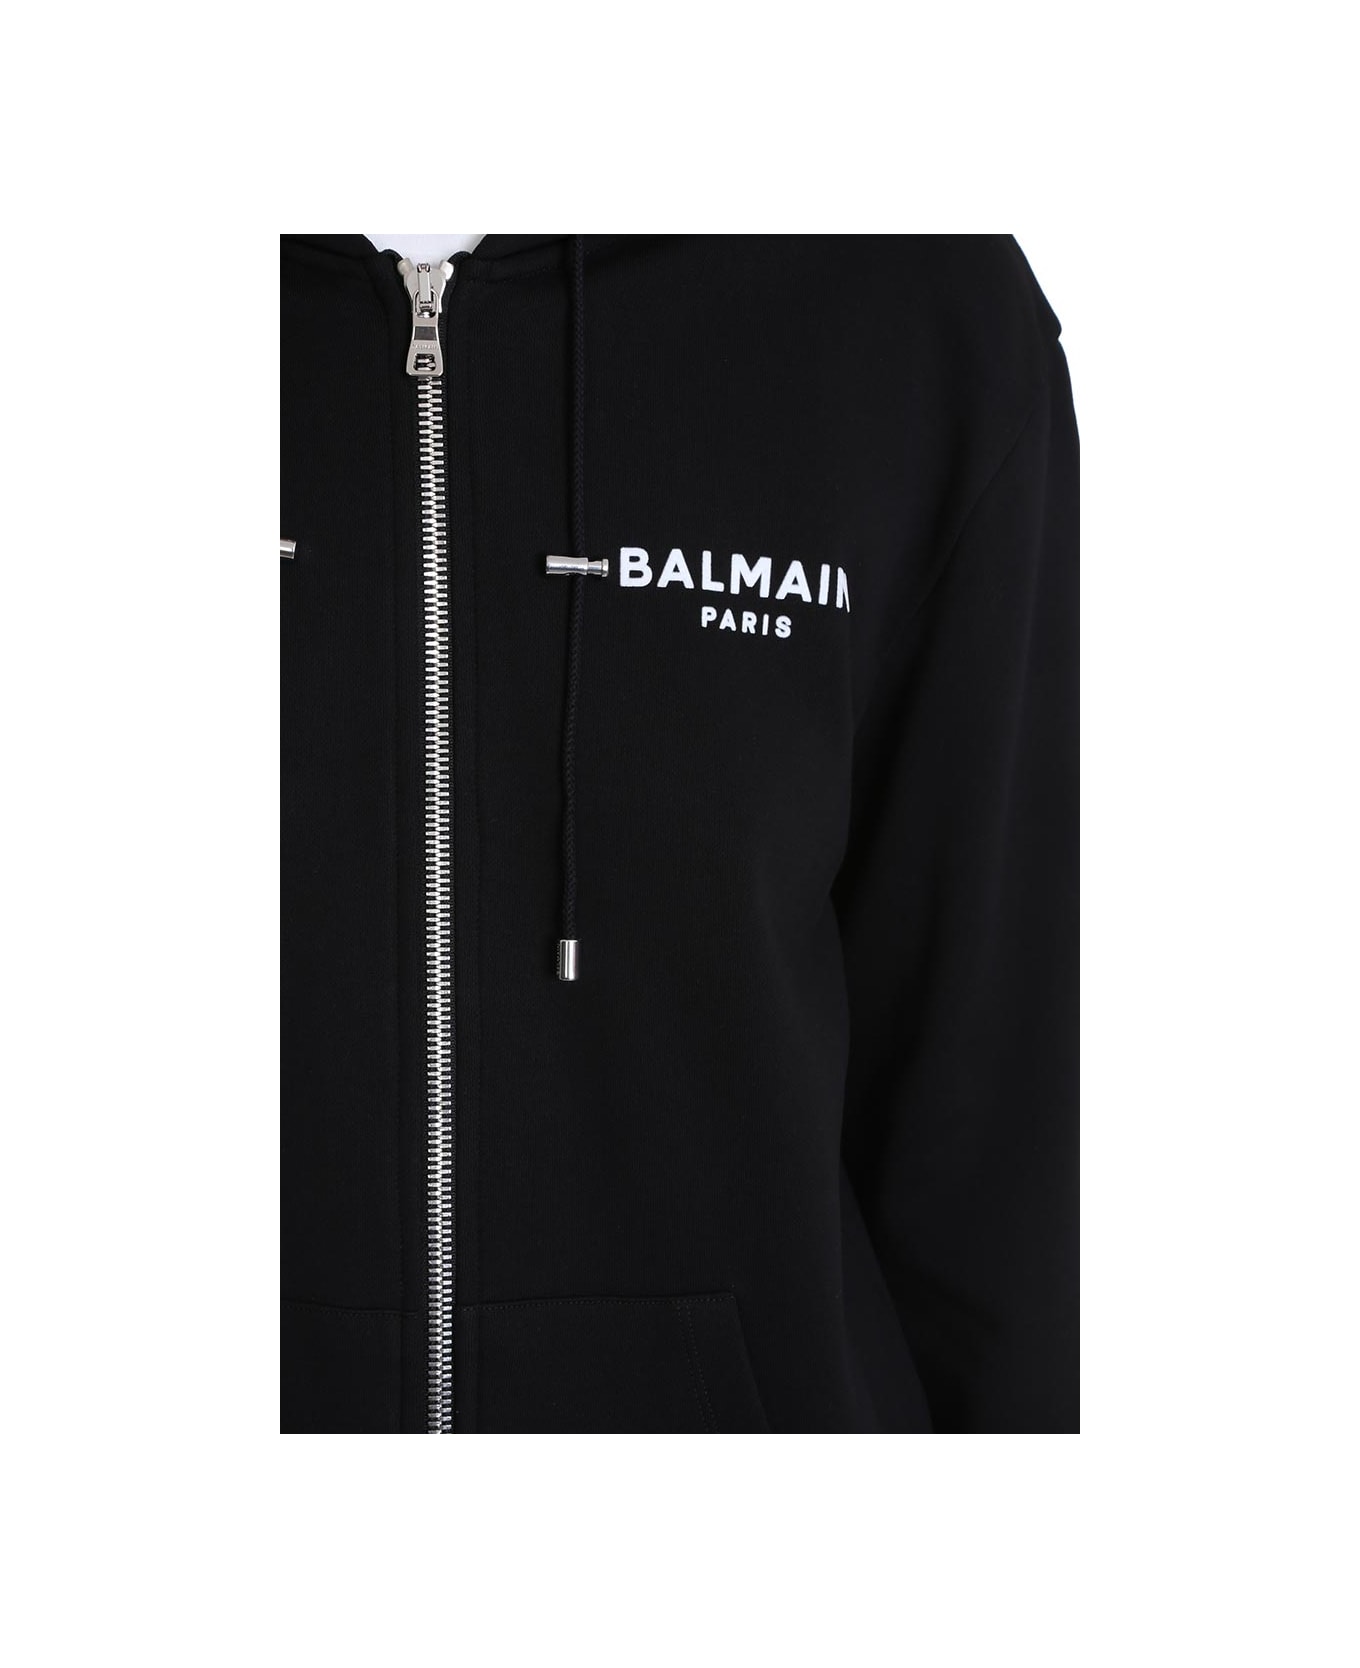 Balmain Sweatshirt In Black Cotton - Nero/bianco